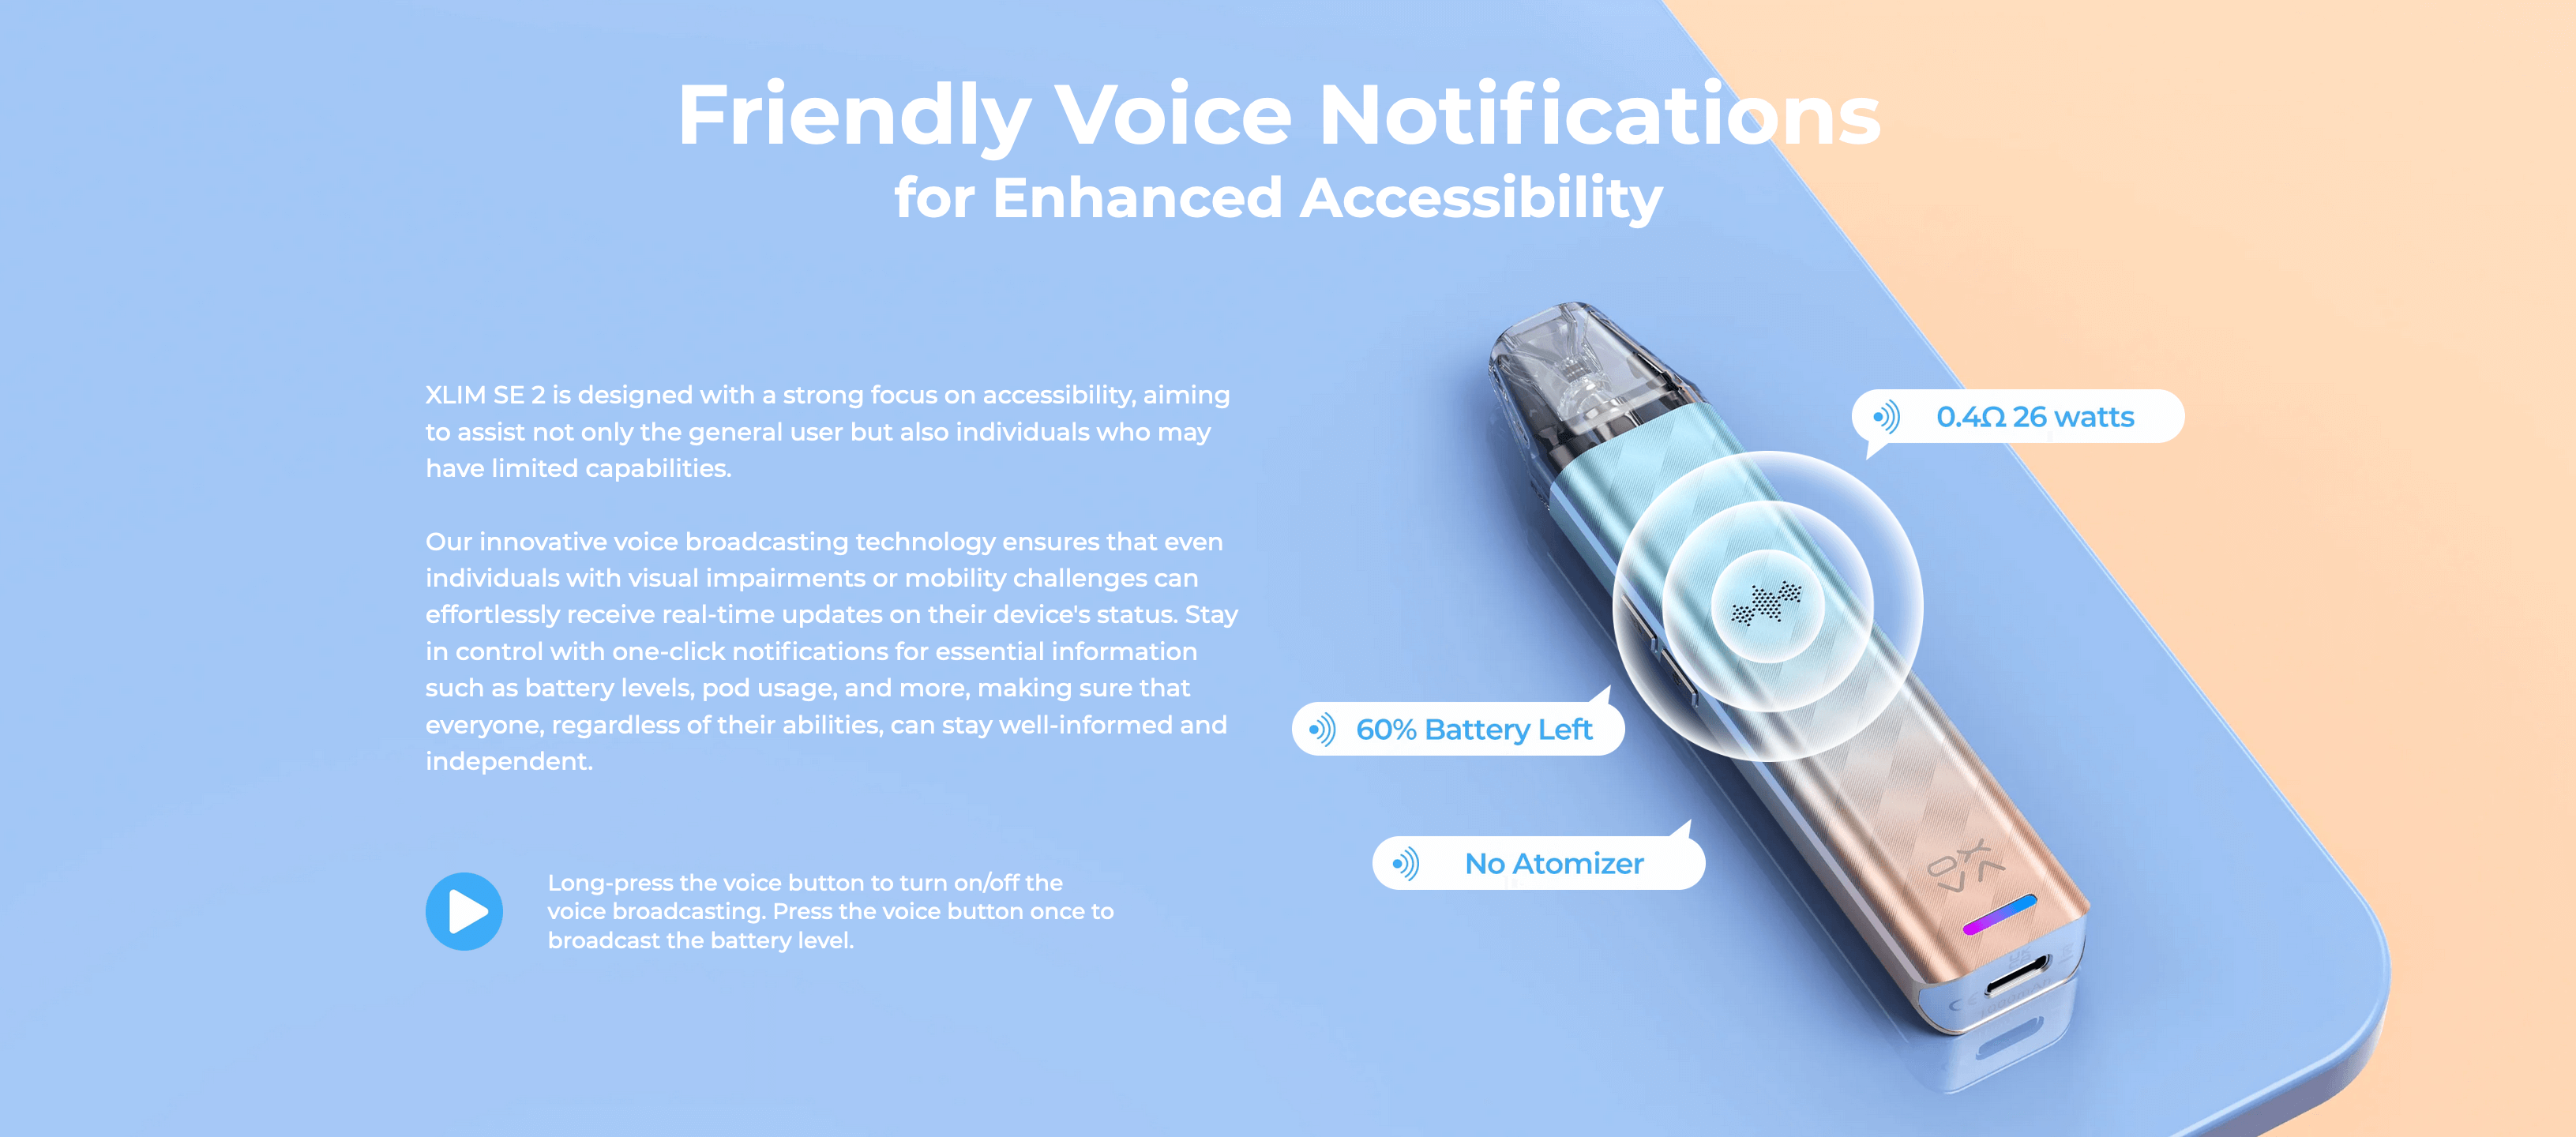 Oxva Xlim SE 2 Kit - friendly voice notifications for enhanced accessibility